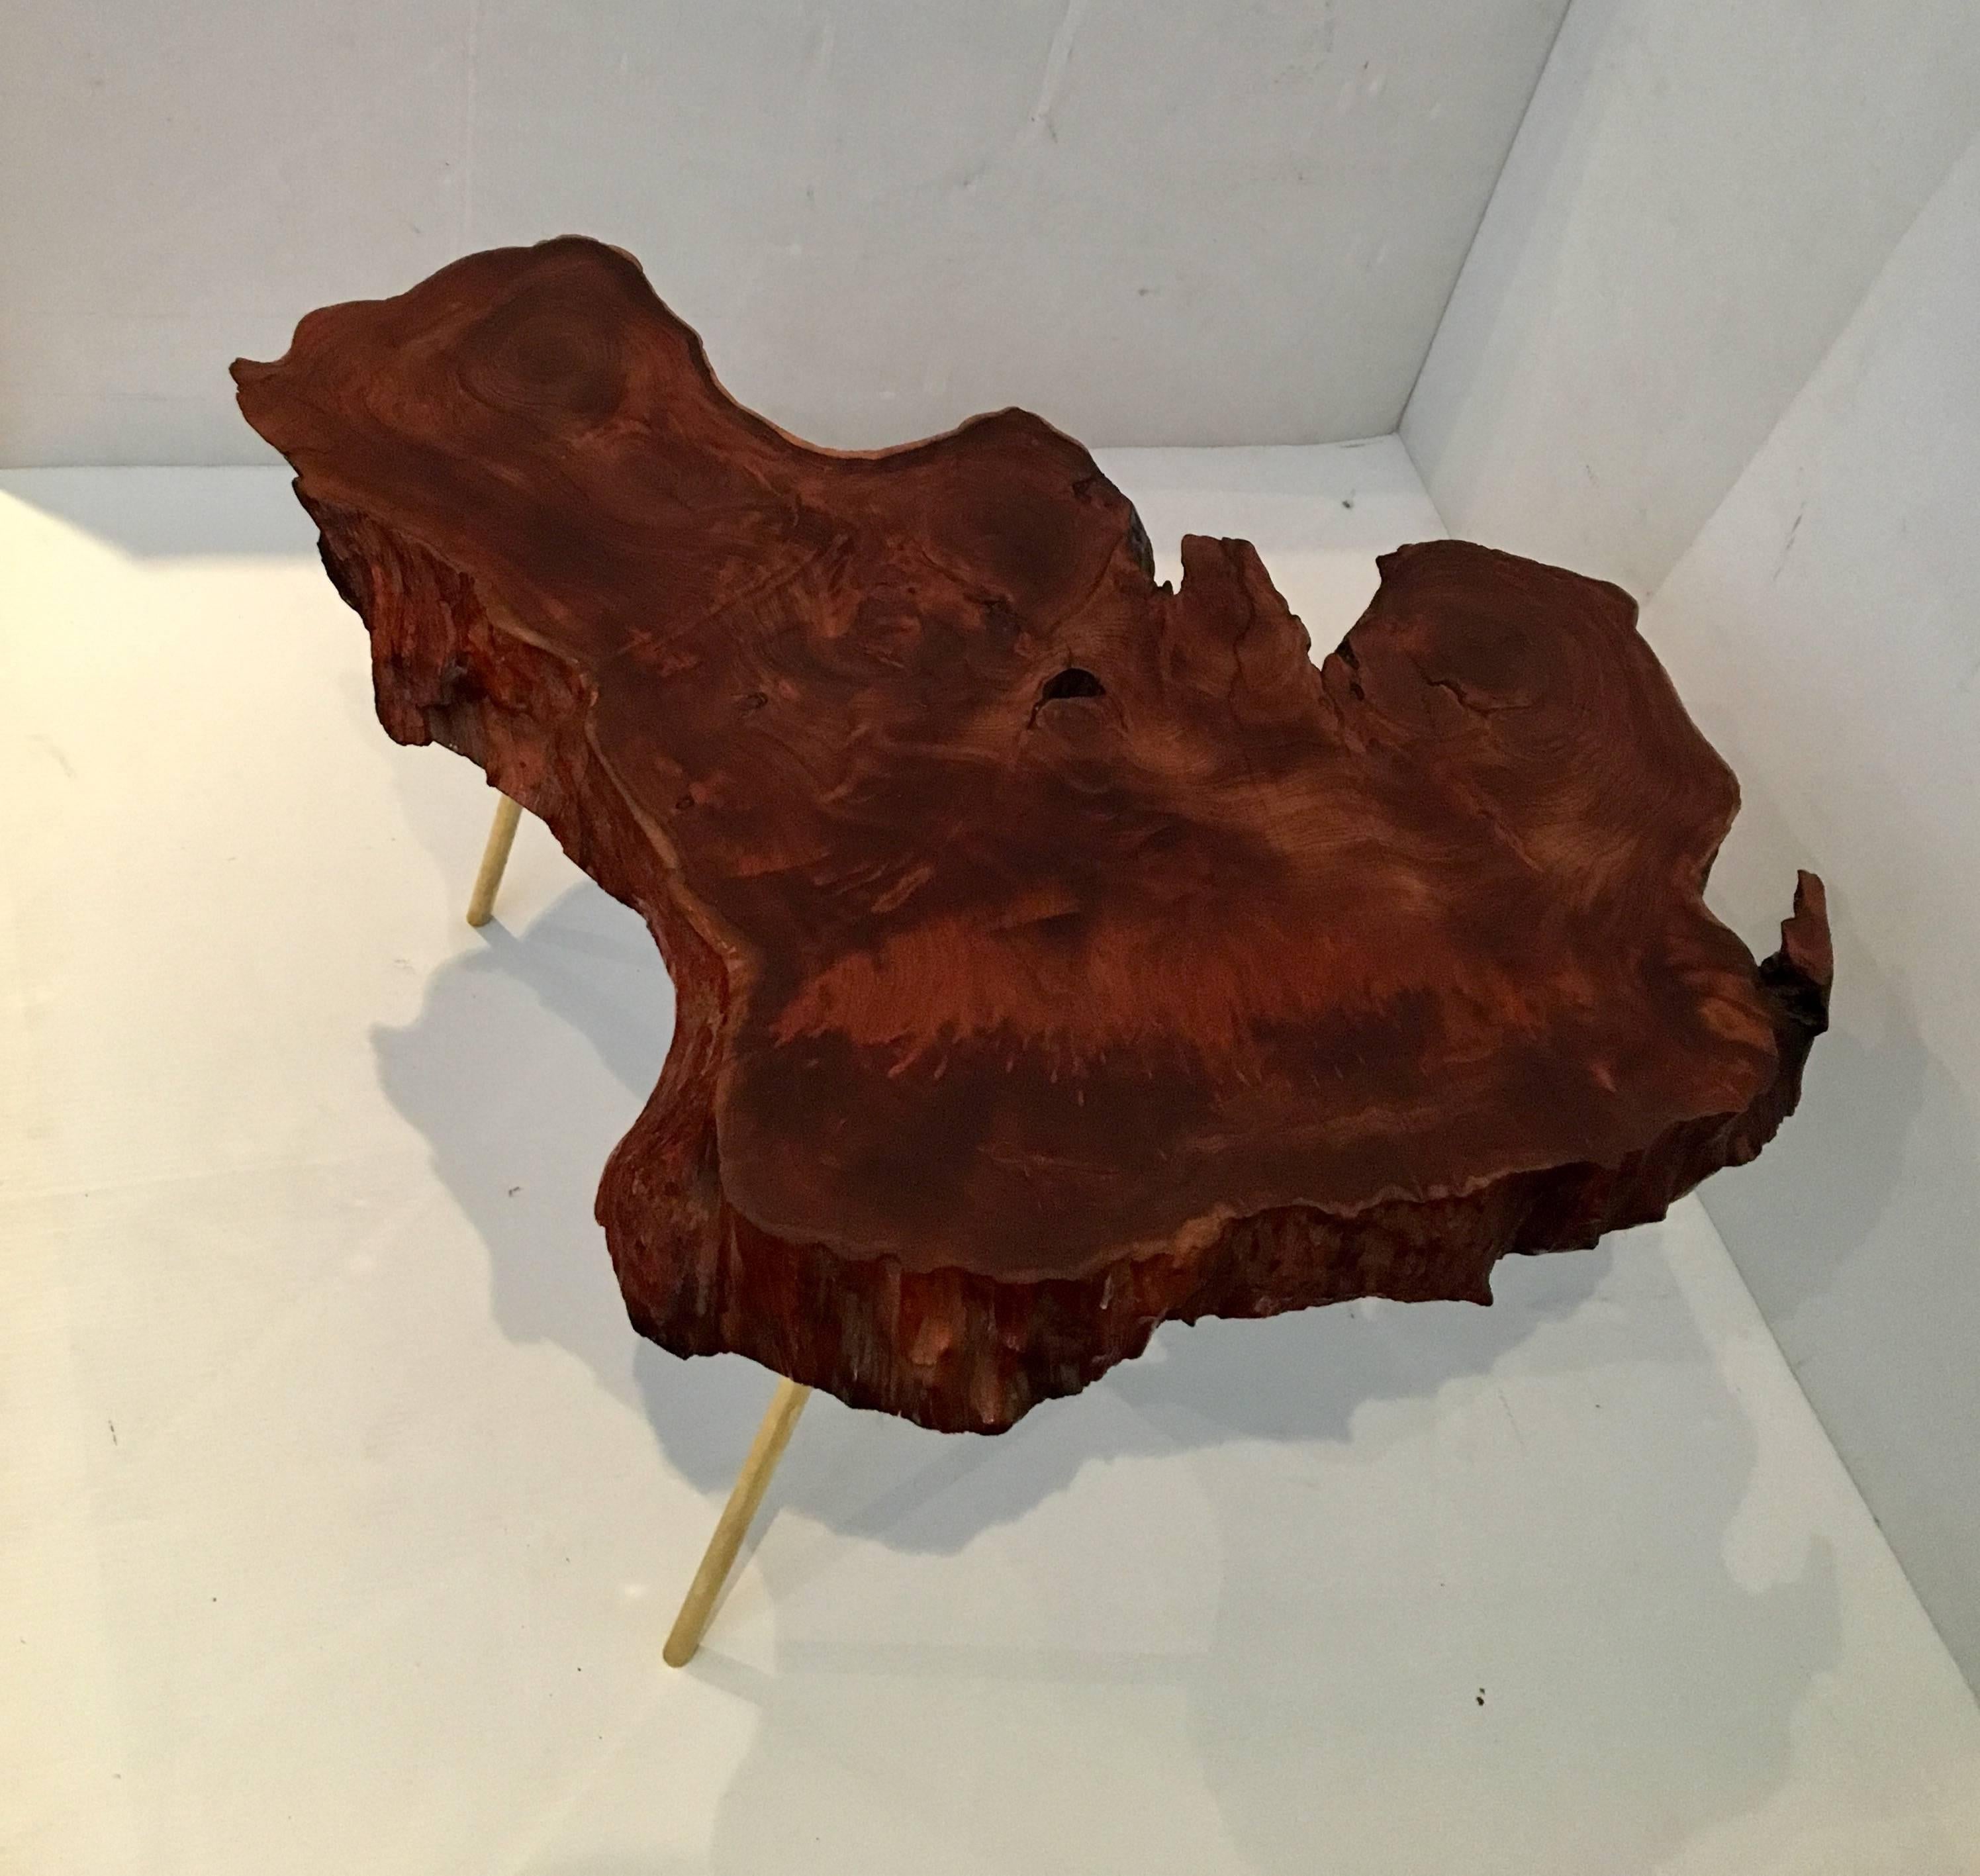 free form wood coffee table